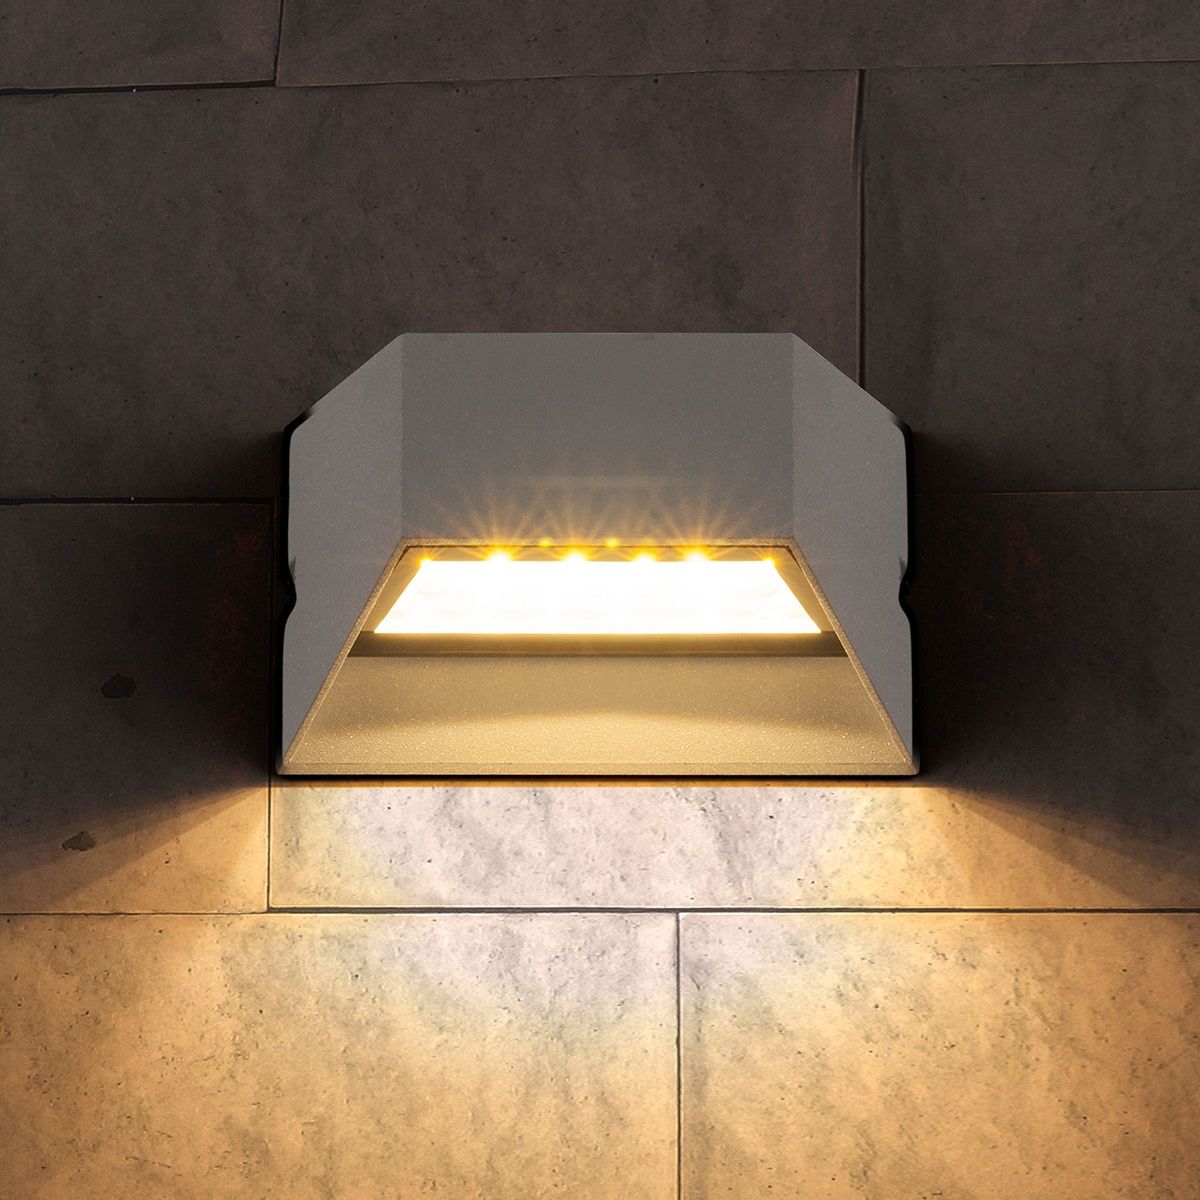 OFION алмазный серый уличный настенный светодиодный светильник 1614 TECHNO LED